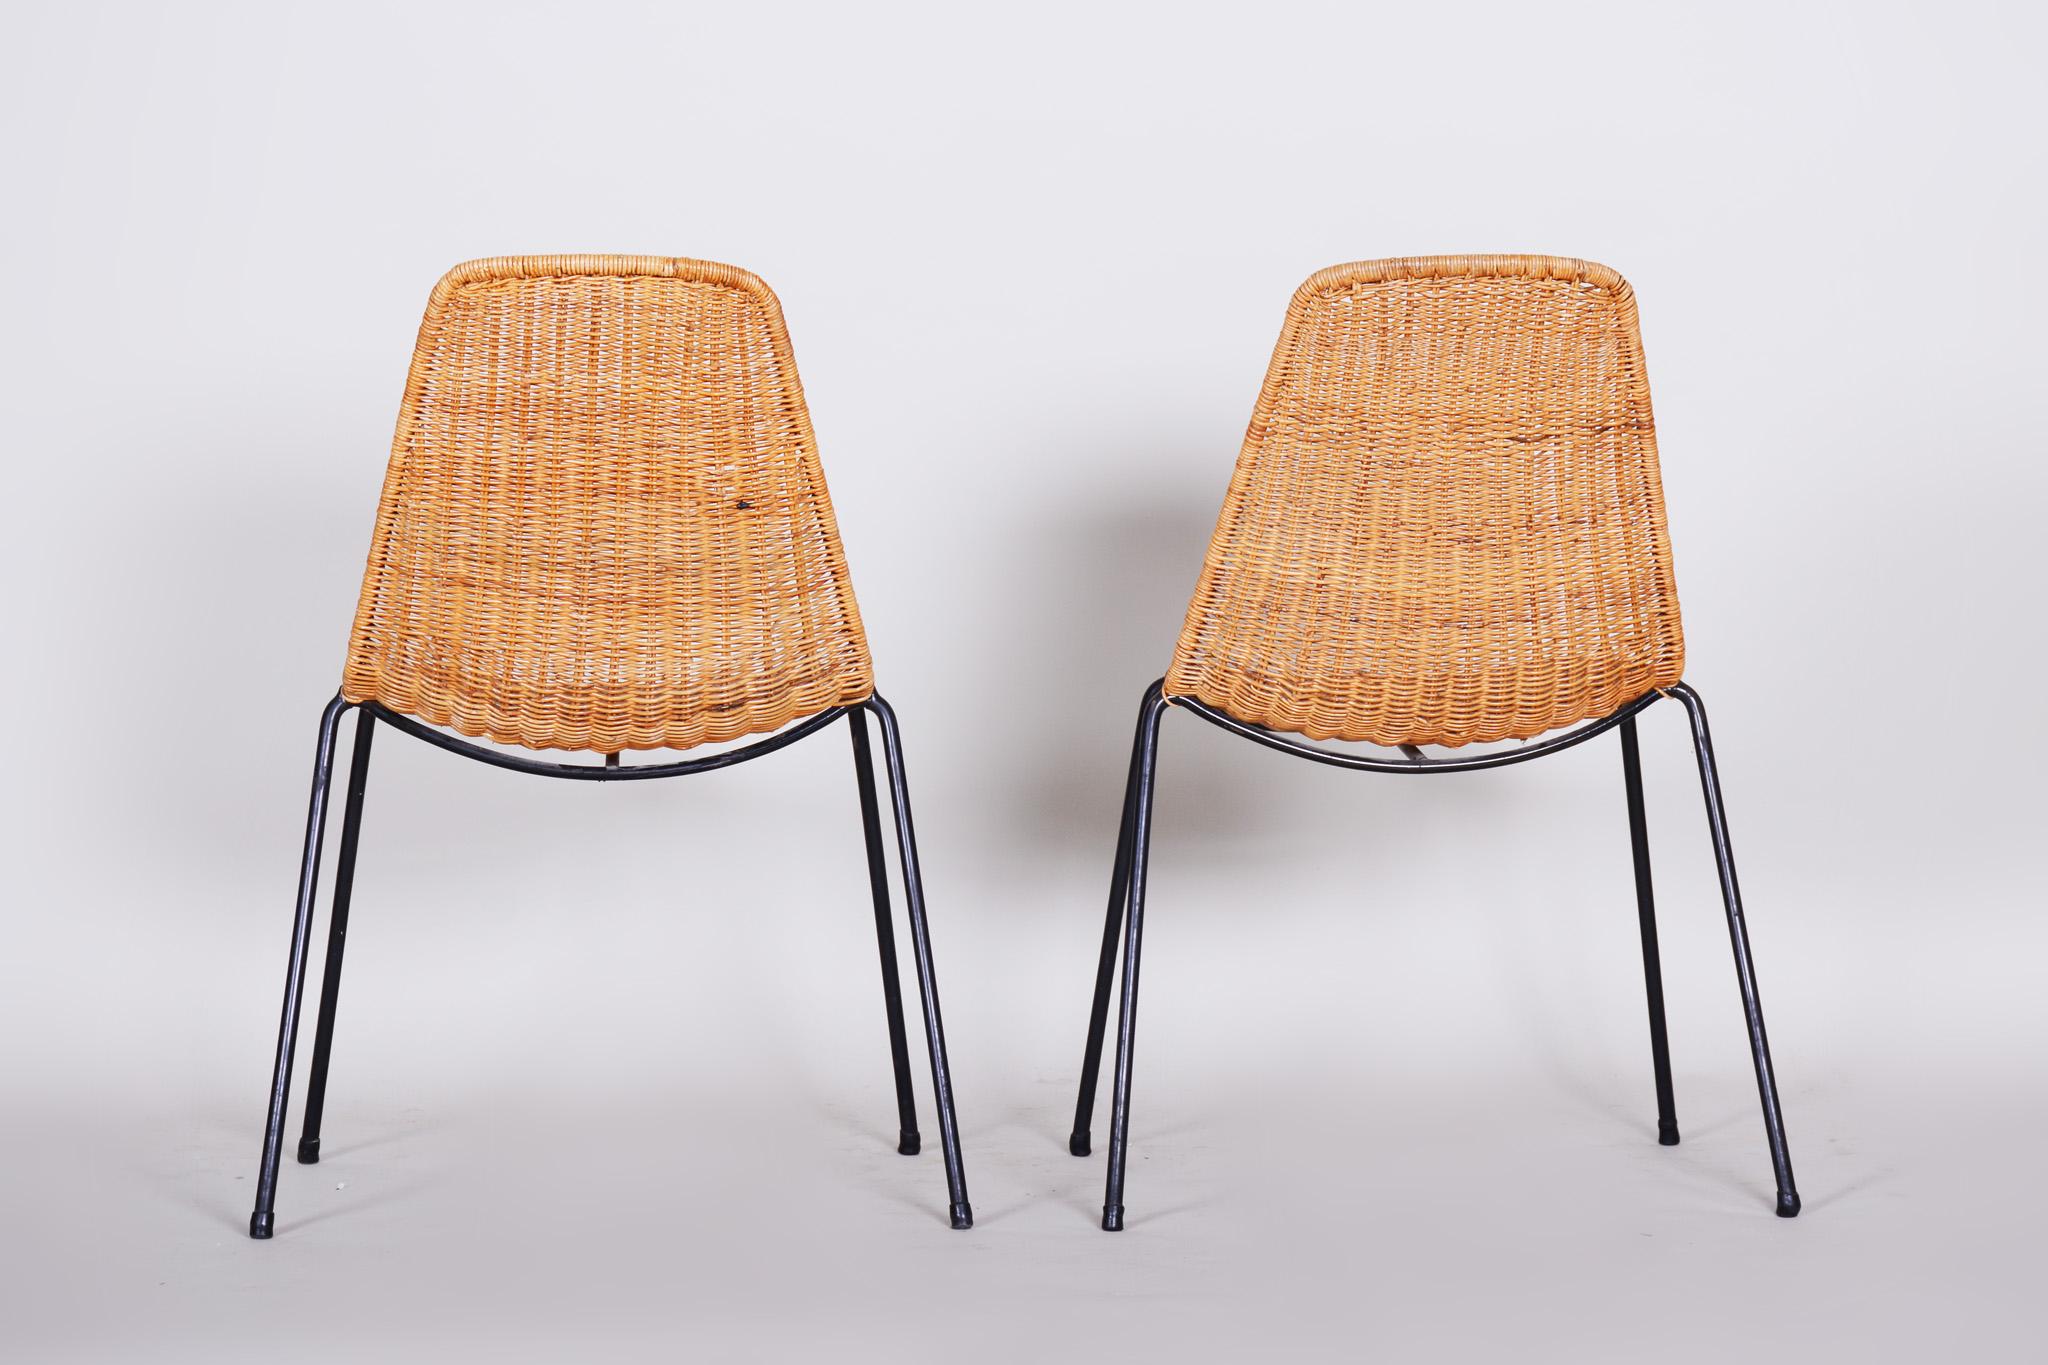 Pair of Scandinavian Midcentury Chairs, 1960s, Rattan-Metal, Original Condition 1